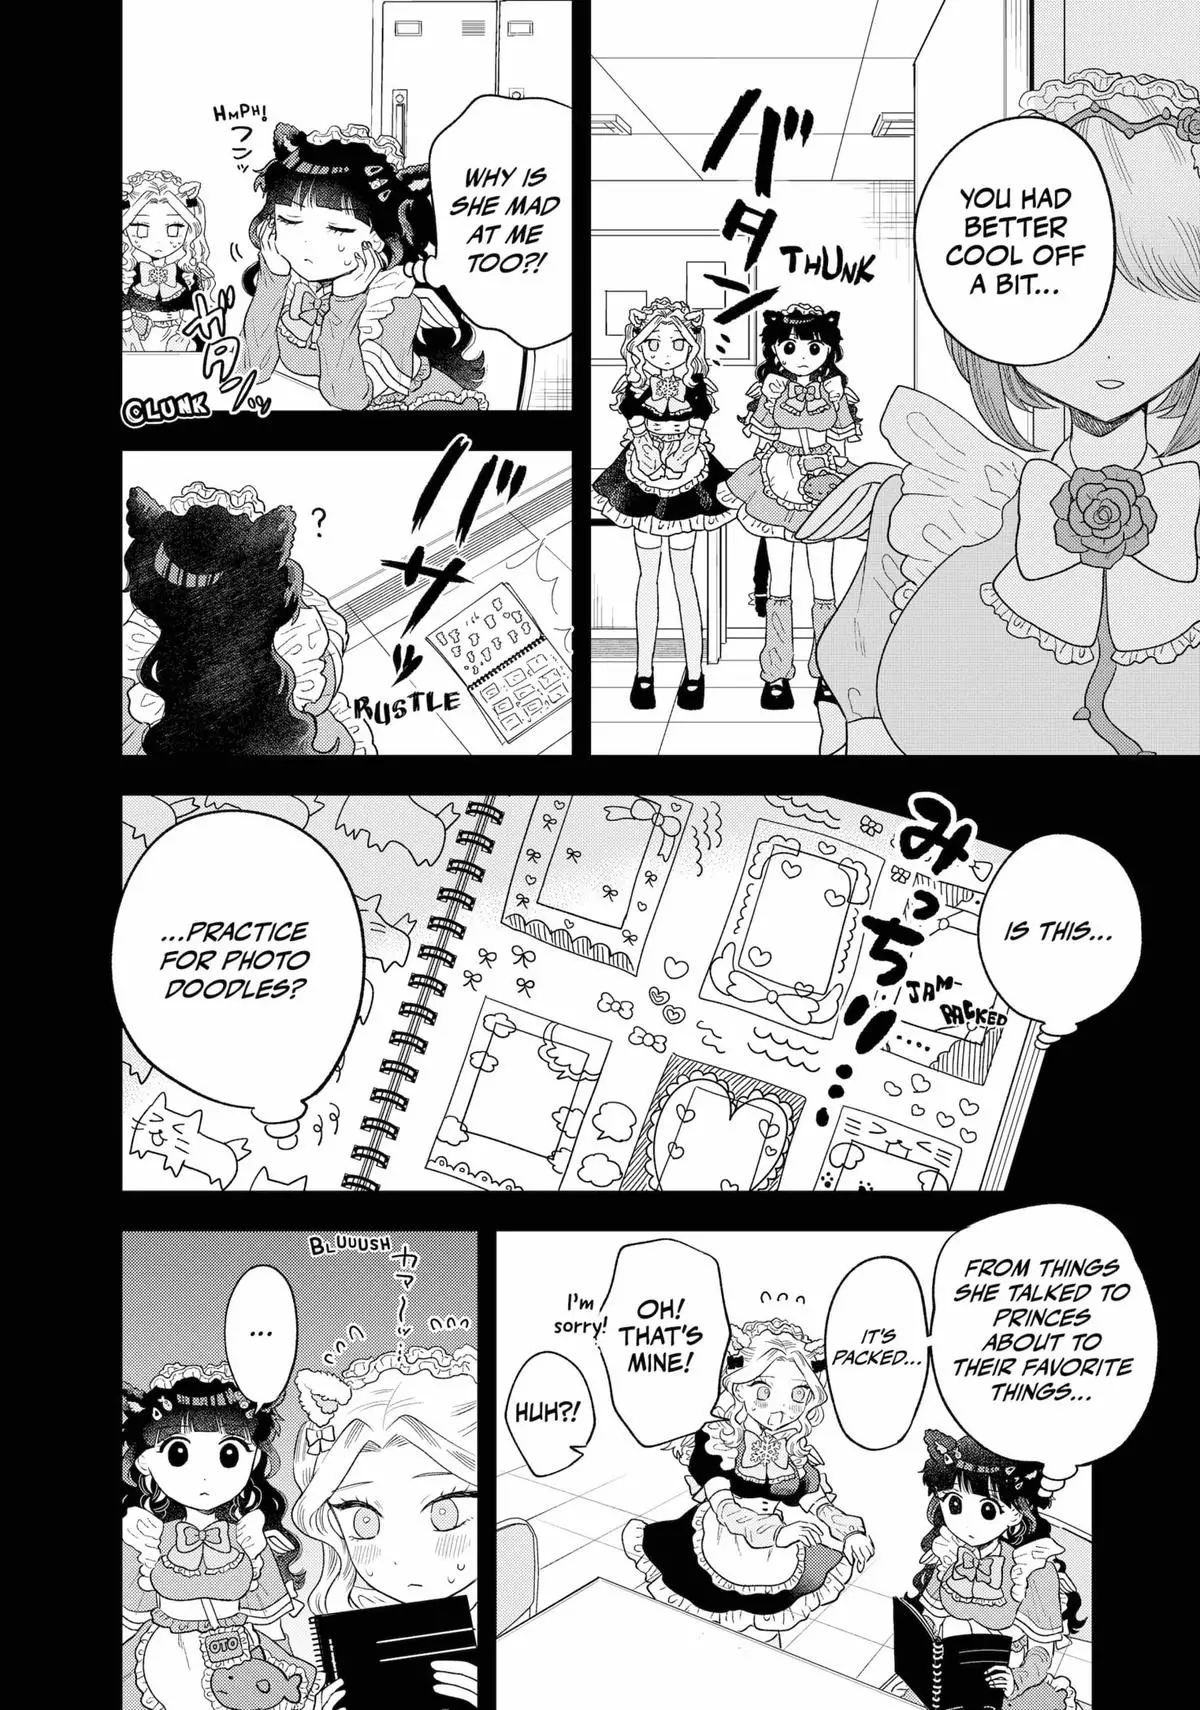 Tsuruko Returns The Favor - 8 page 20-4ae2408e